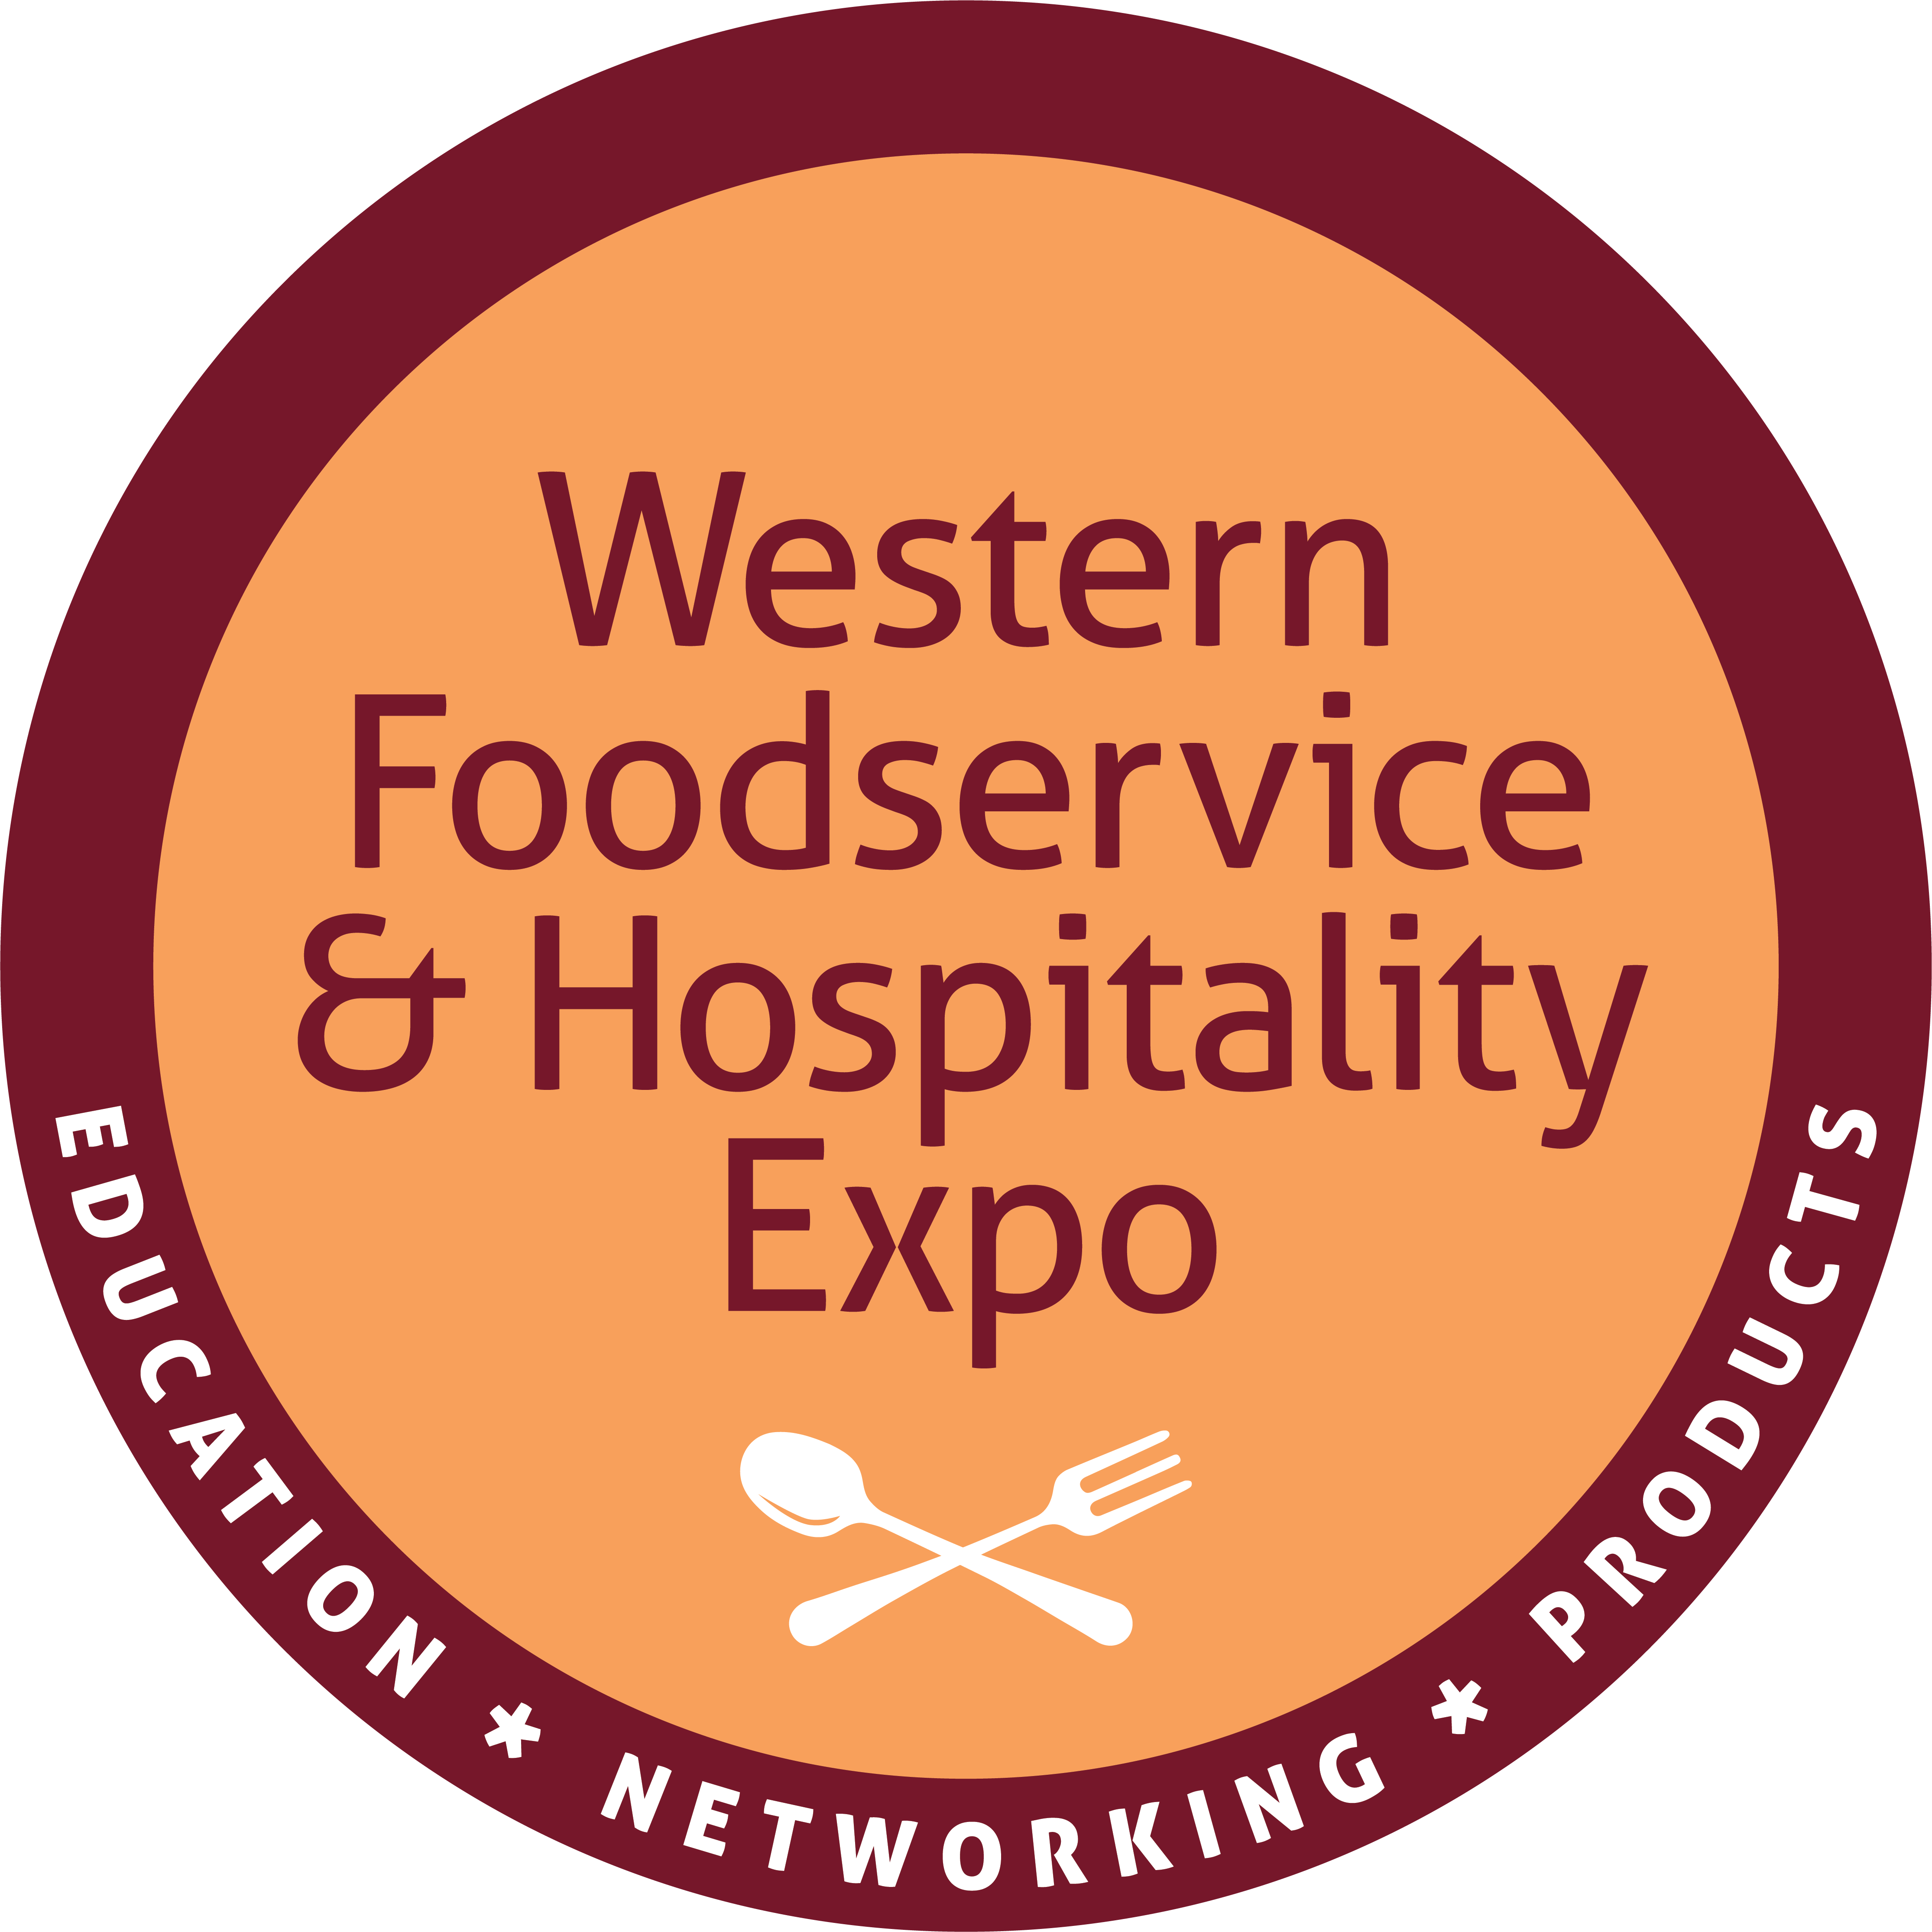 Western foodservice & hospitality expo